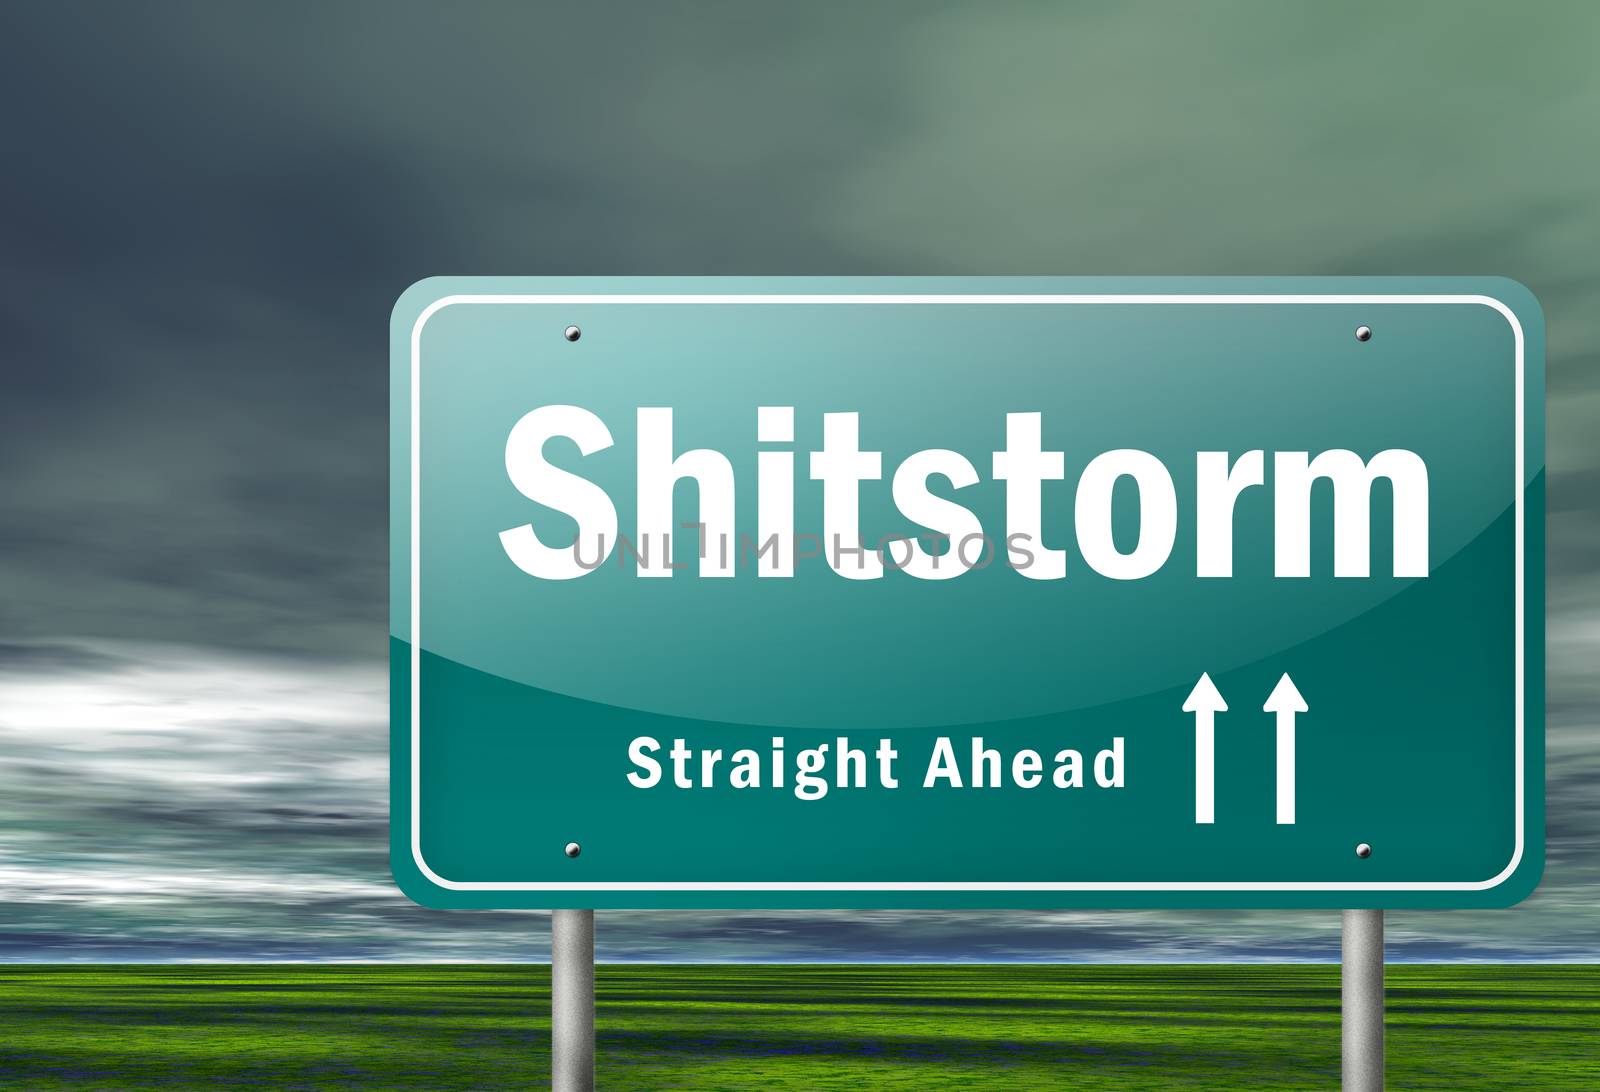 Highway Signpost "Shitstorm" by mindscanner